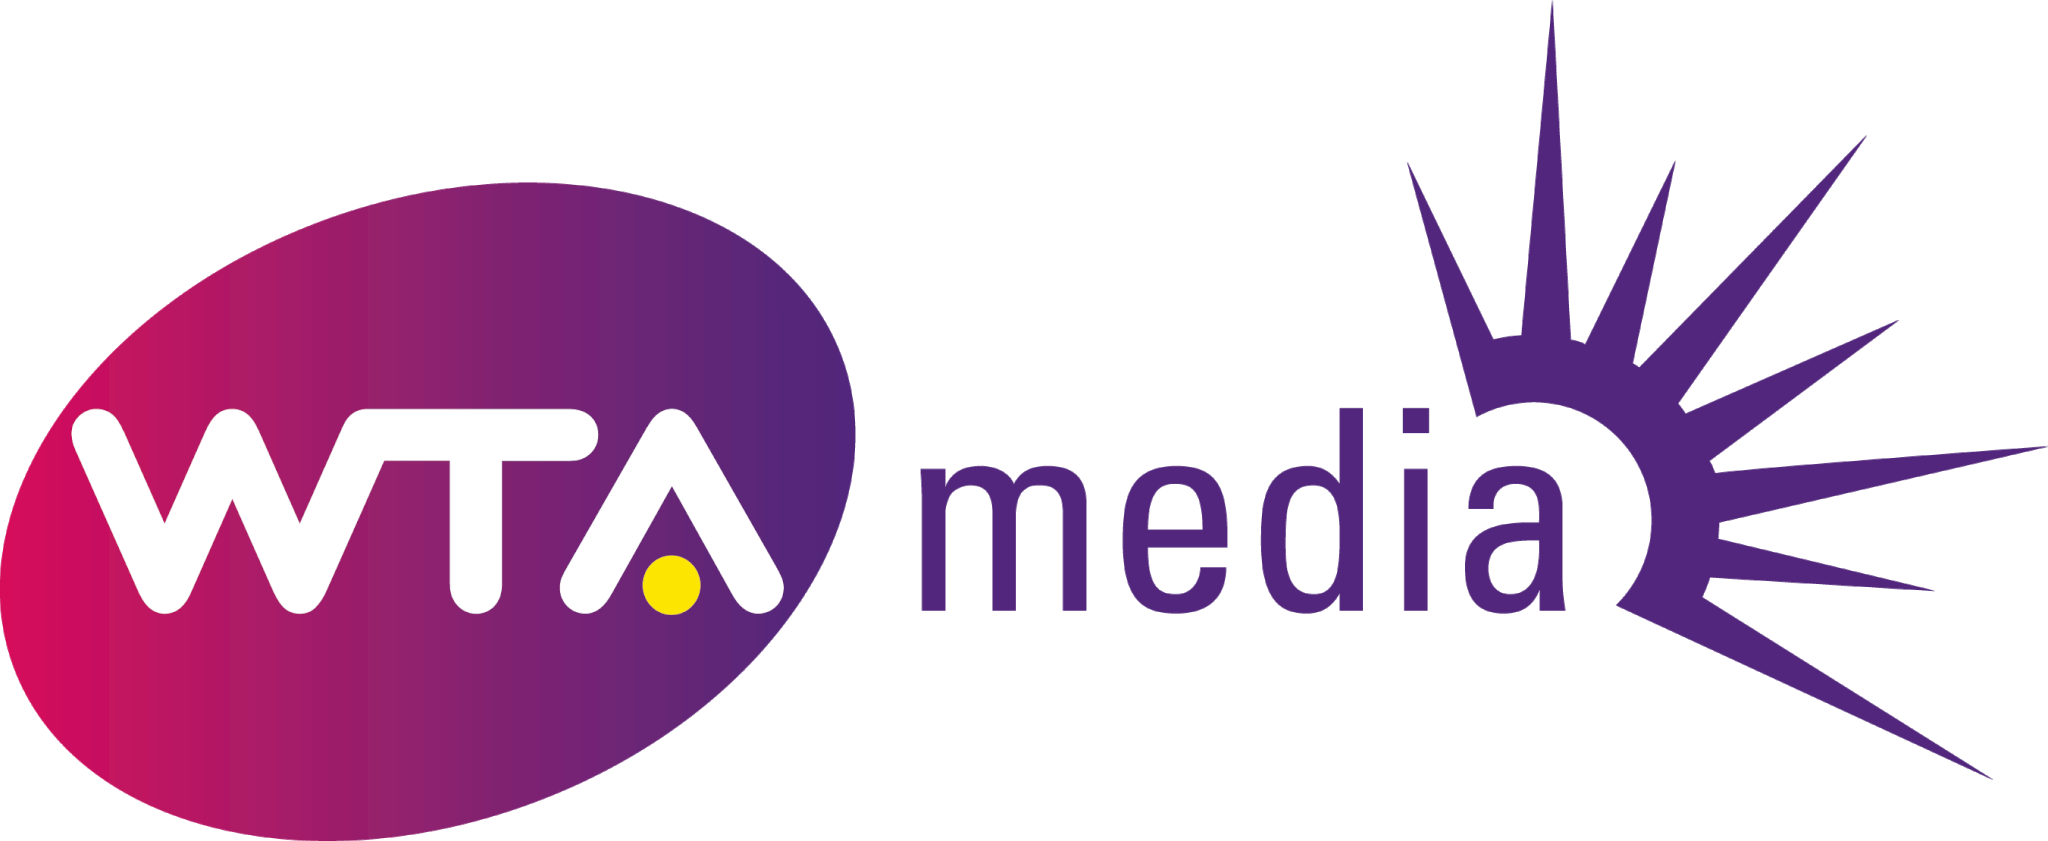 Media House Logo - WTA Media | Perform Group